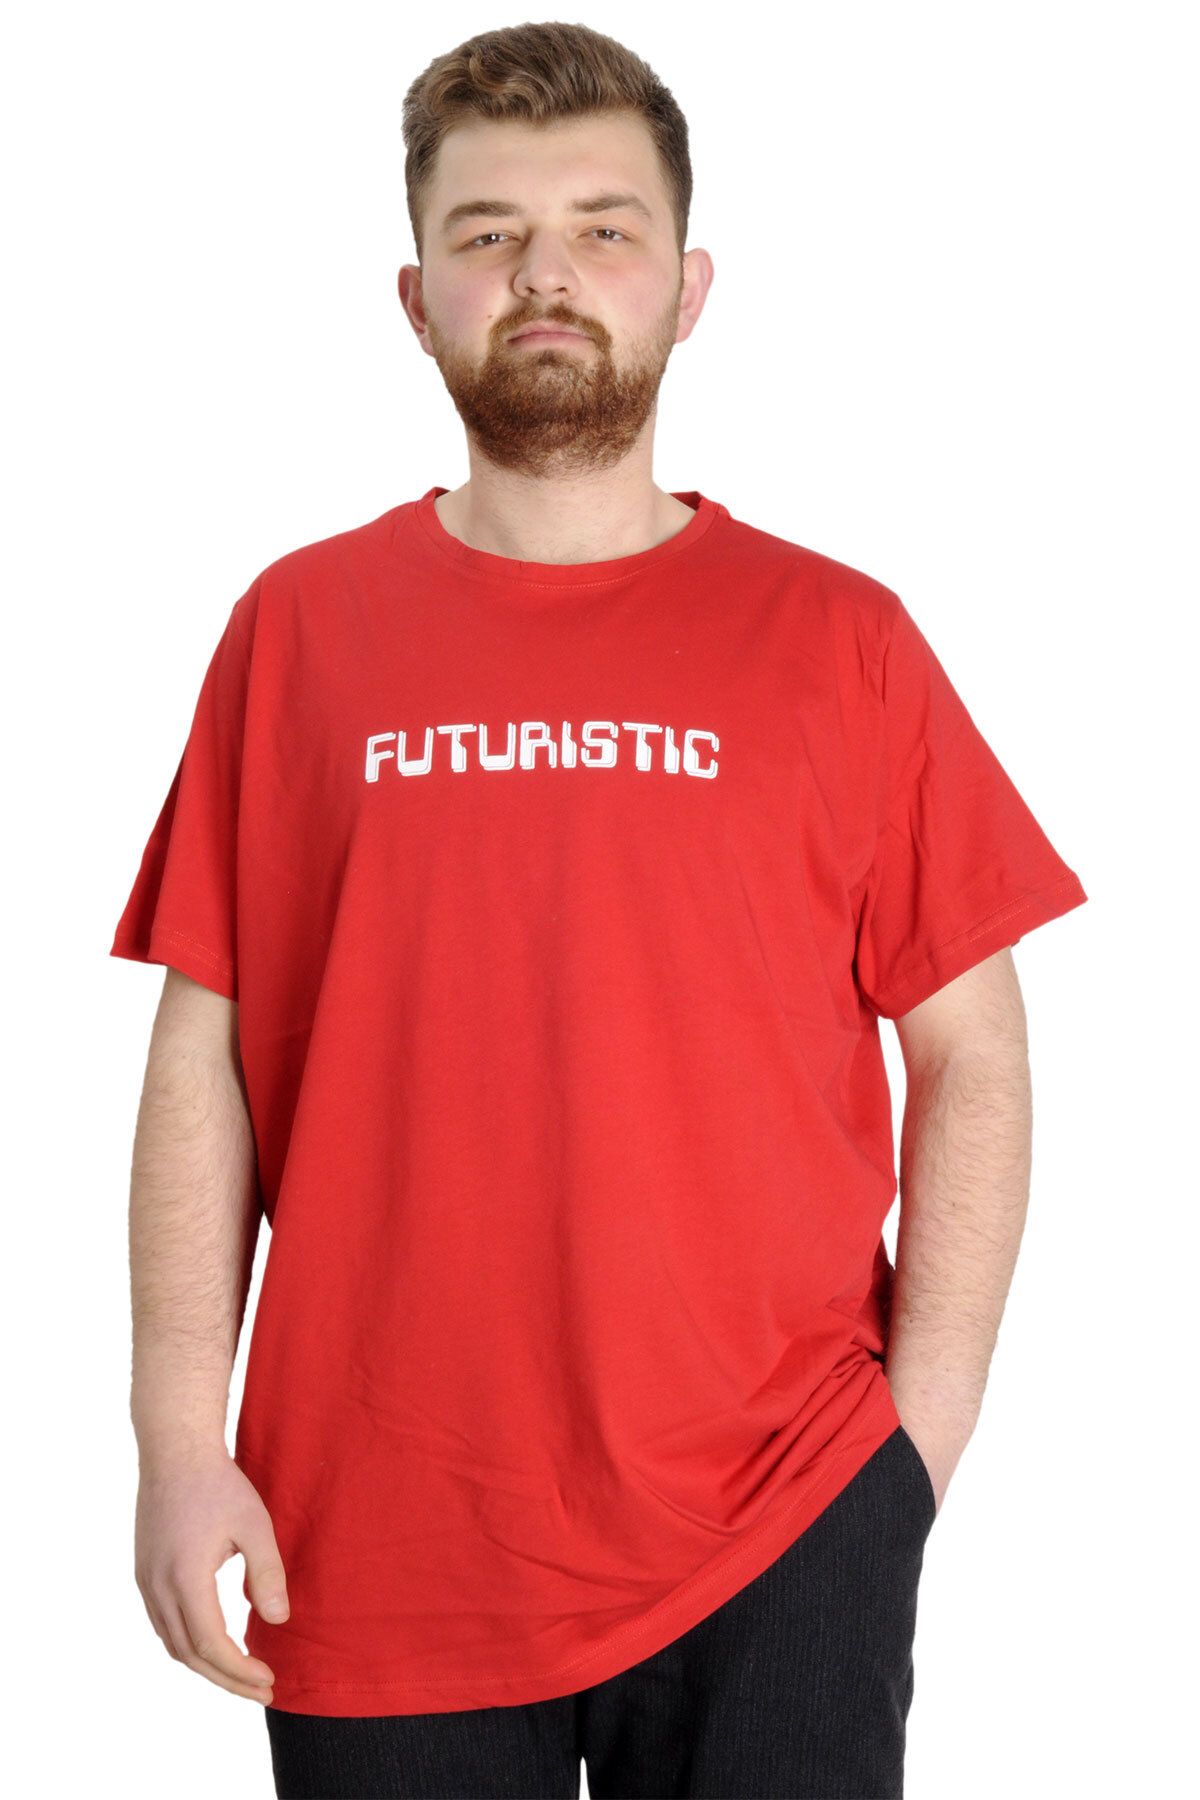 Modexl Mode Xl Büyük Beden Erkek T-shirt Futurıstıc 23142 Kırmızı